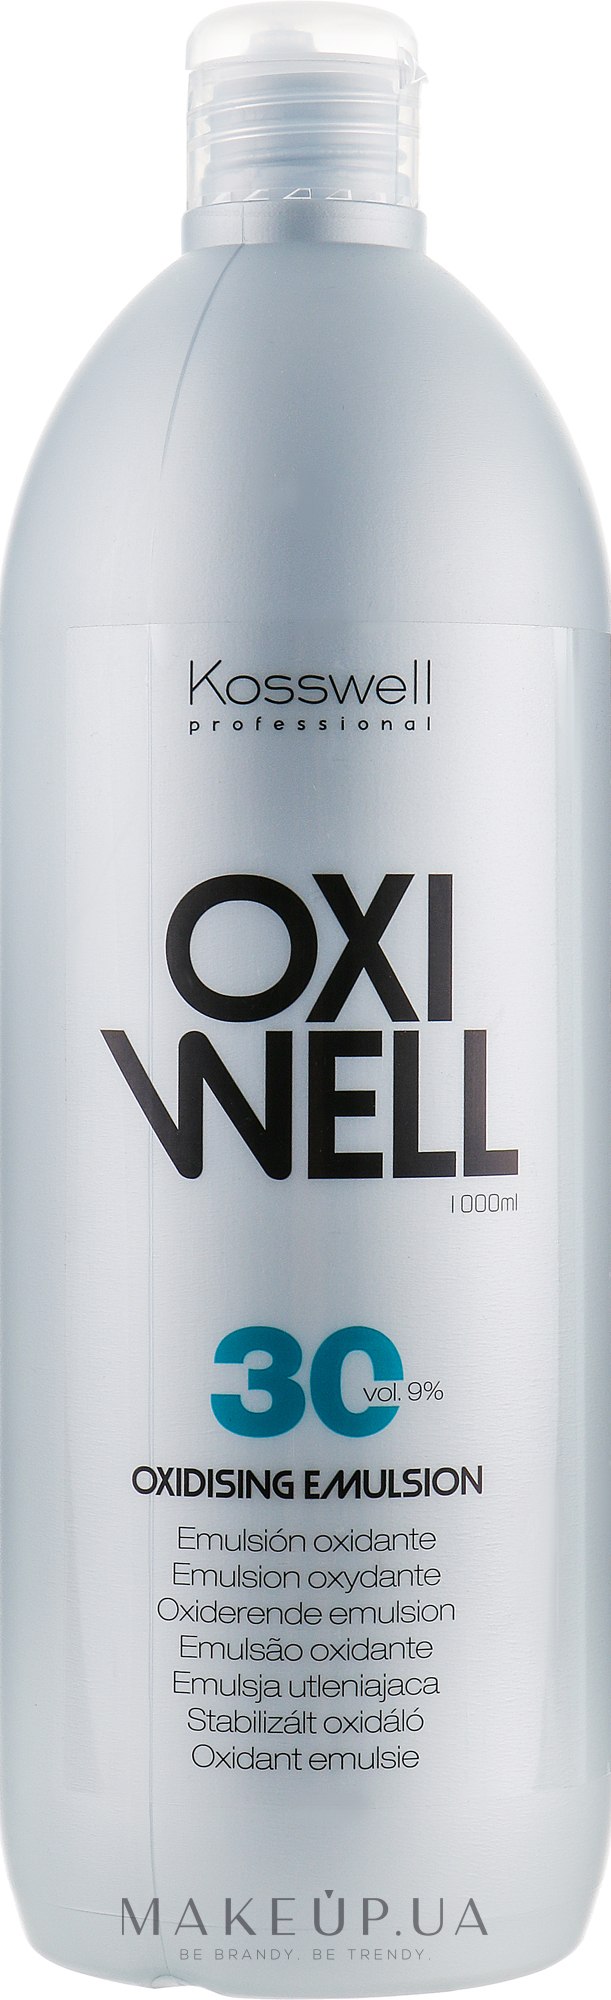 Окислительная эмульсия, 9% - Kosswell Professional Equium Oxidizing Emulsion Oxiwell 9% 30 vol — фото 1000ml